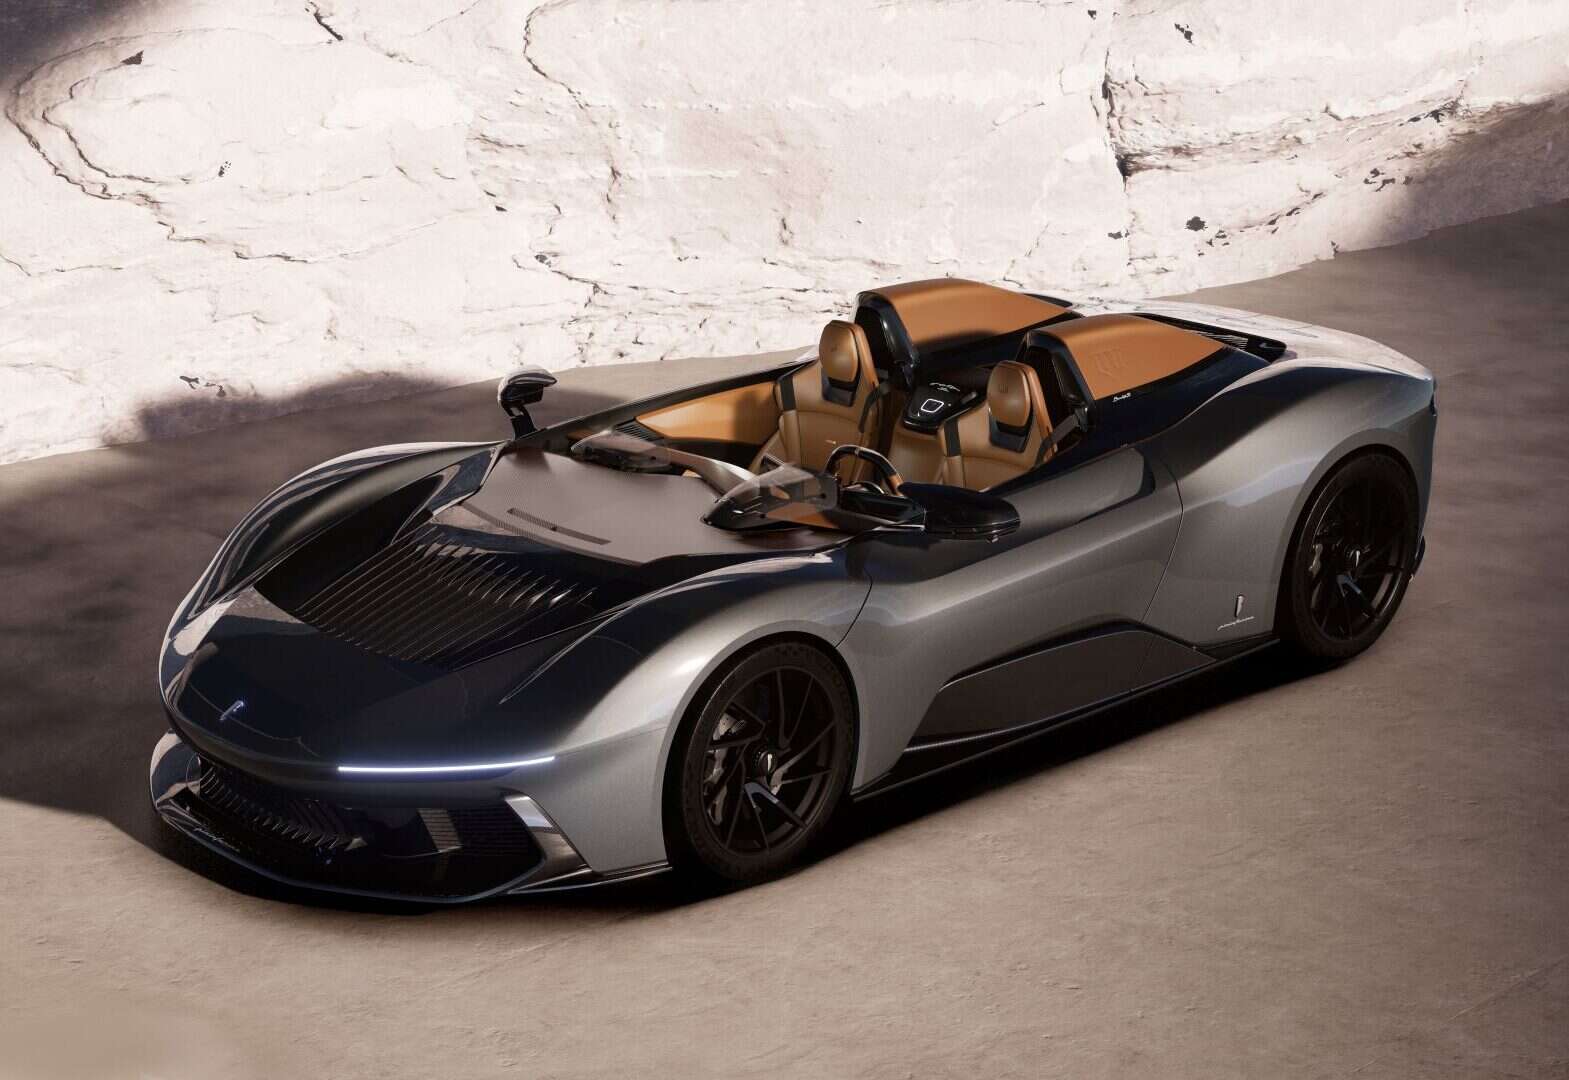 Automobili Pininfarina Reveals New Bruce Wayne-inspired Cars